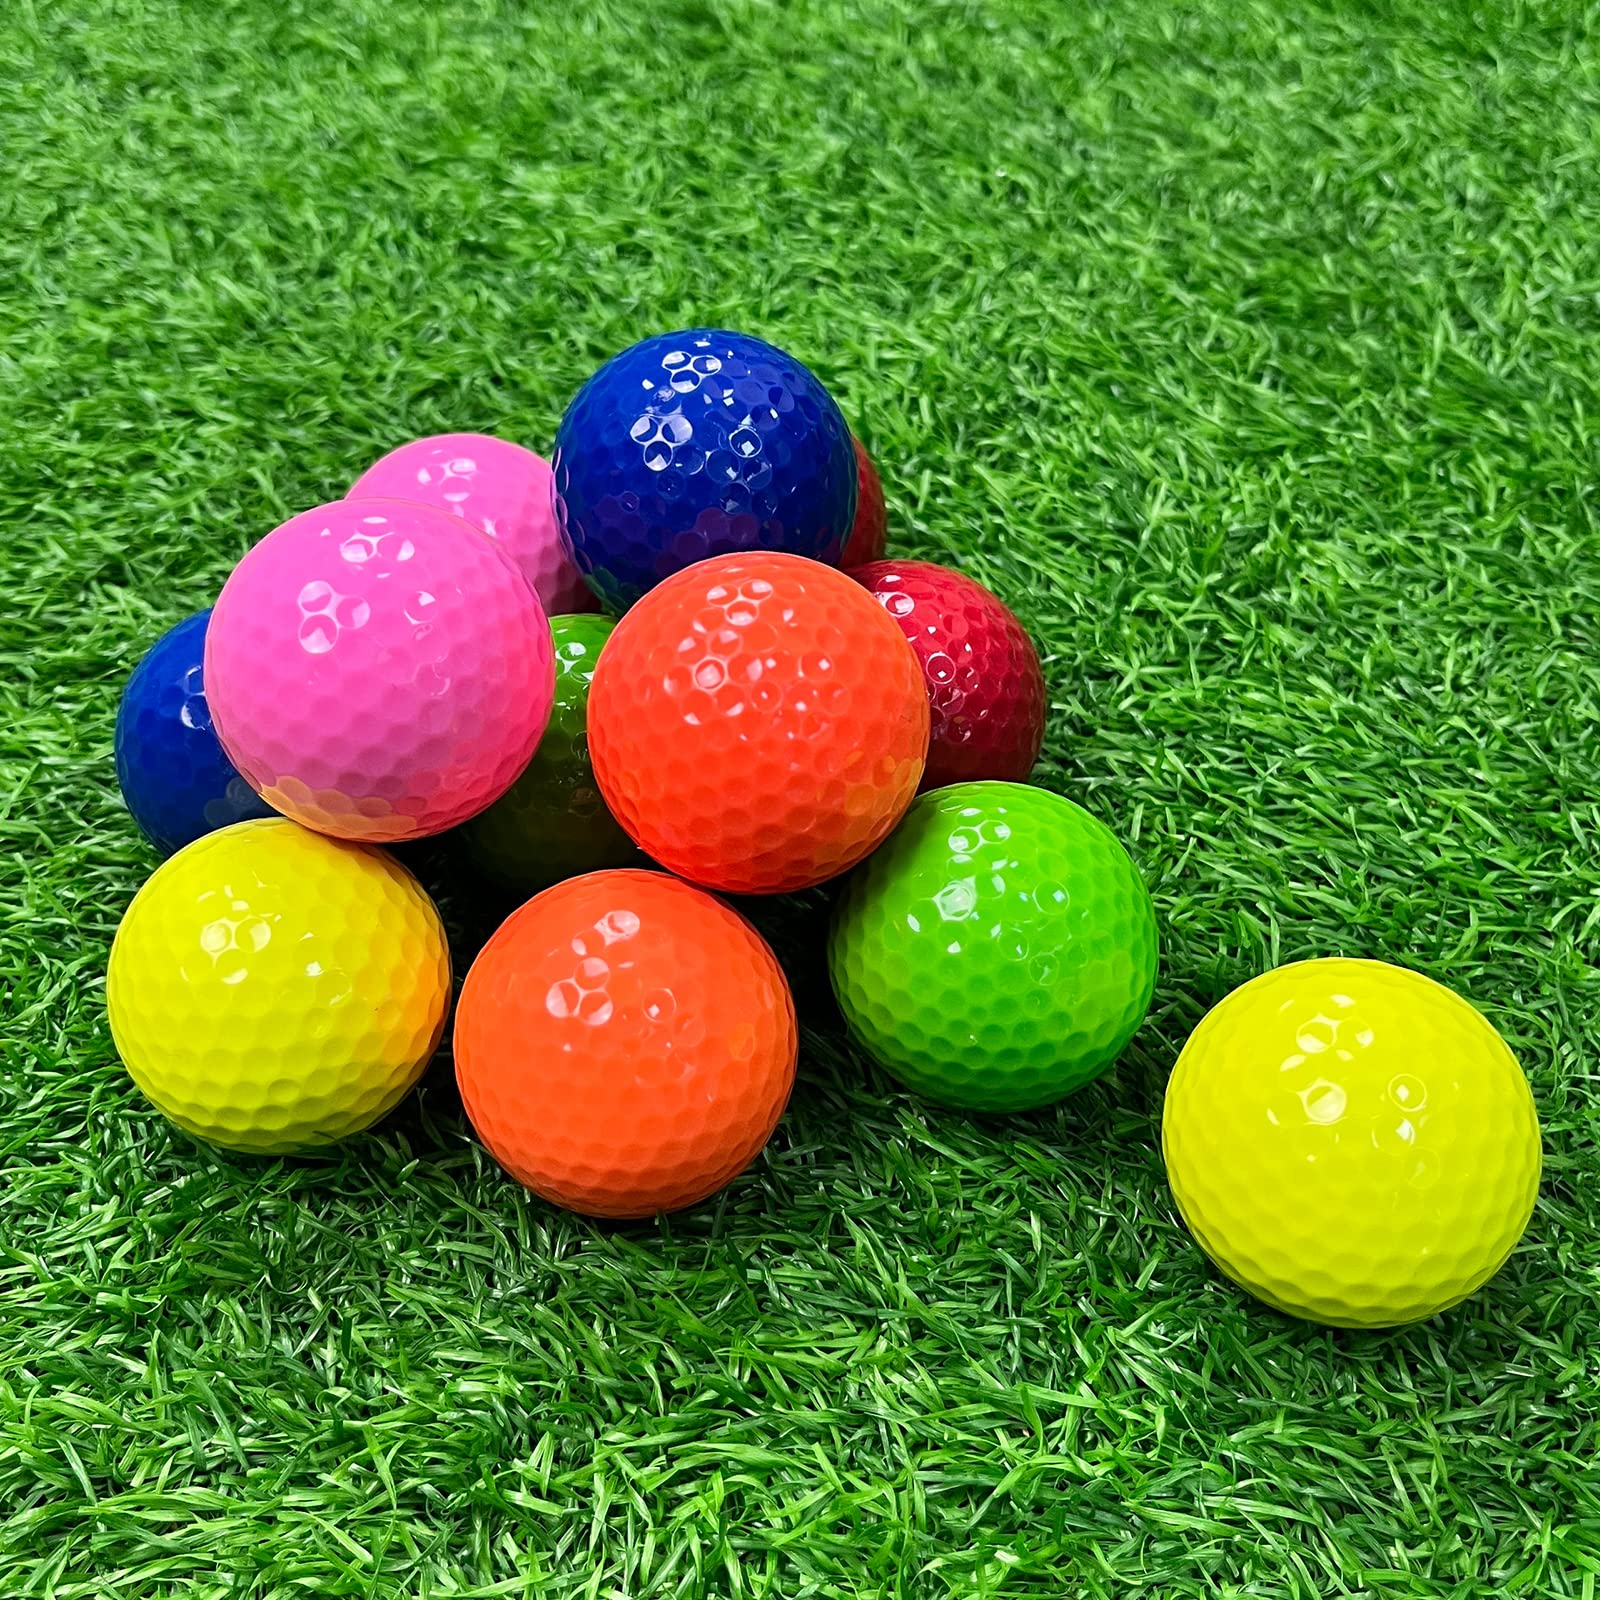 KOFULL Golf Balls - 1 Dozen Colored Miniature Golf Balls, Fun Mini